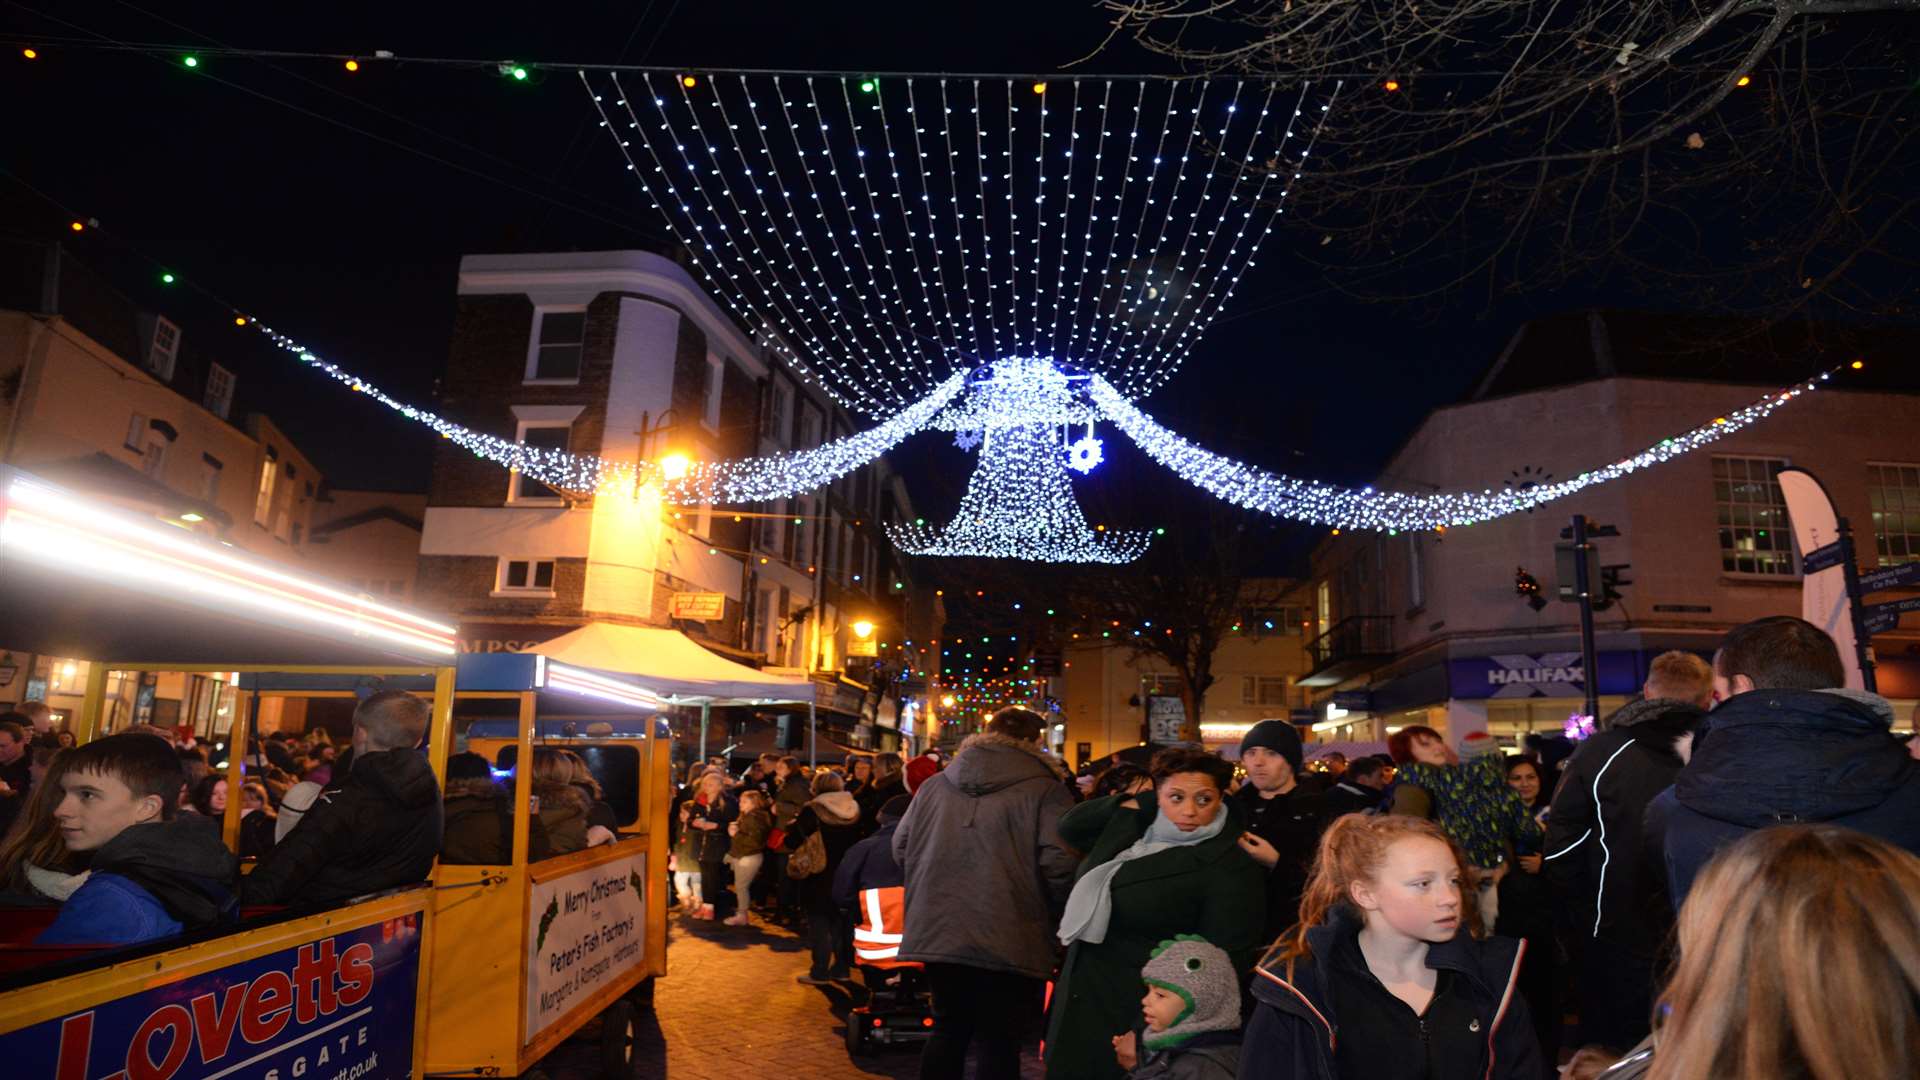 Ramsgate's Christmas lights on Sunday evening